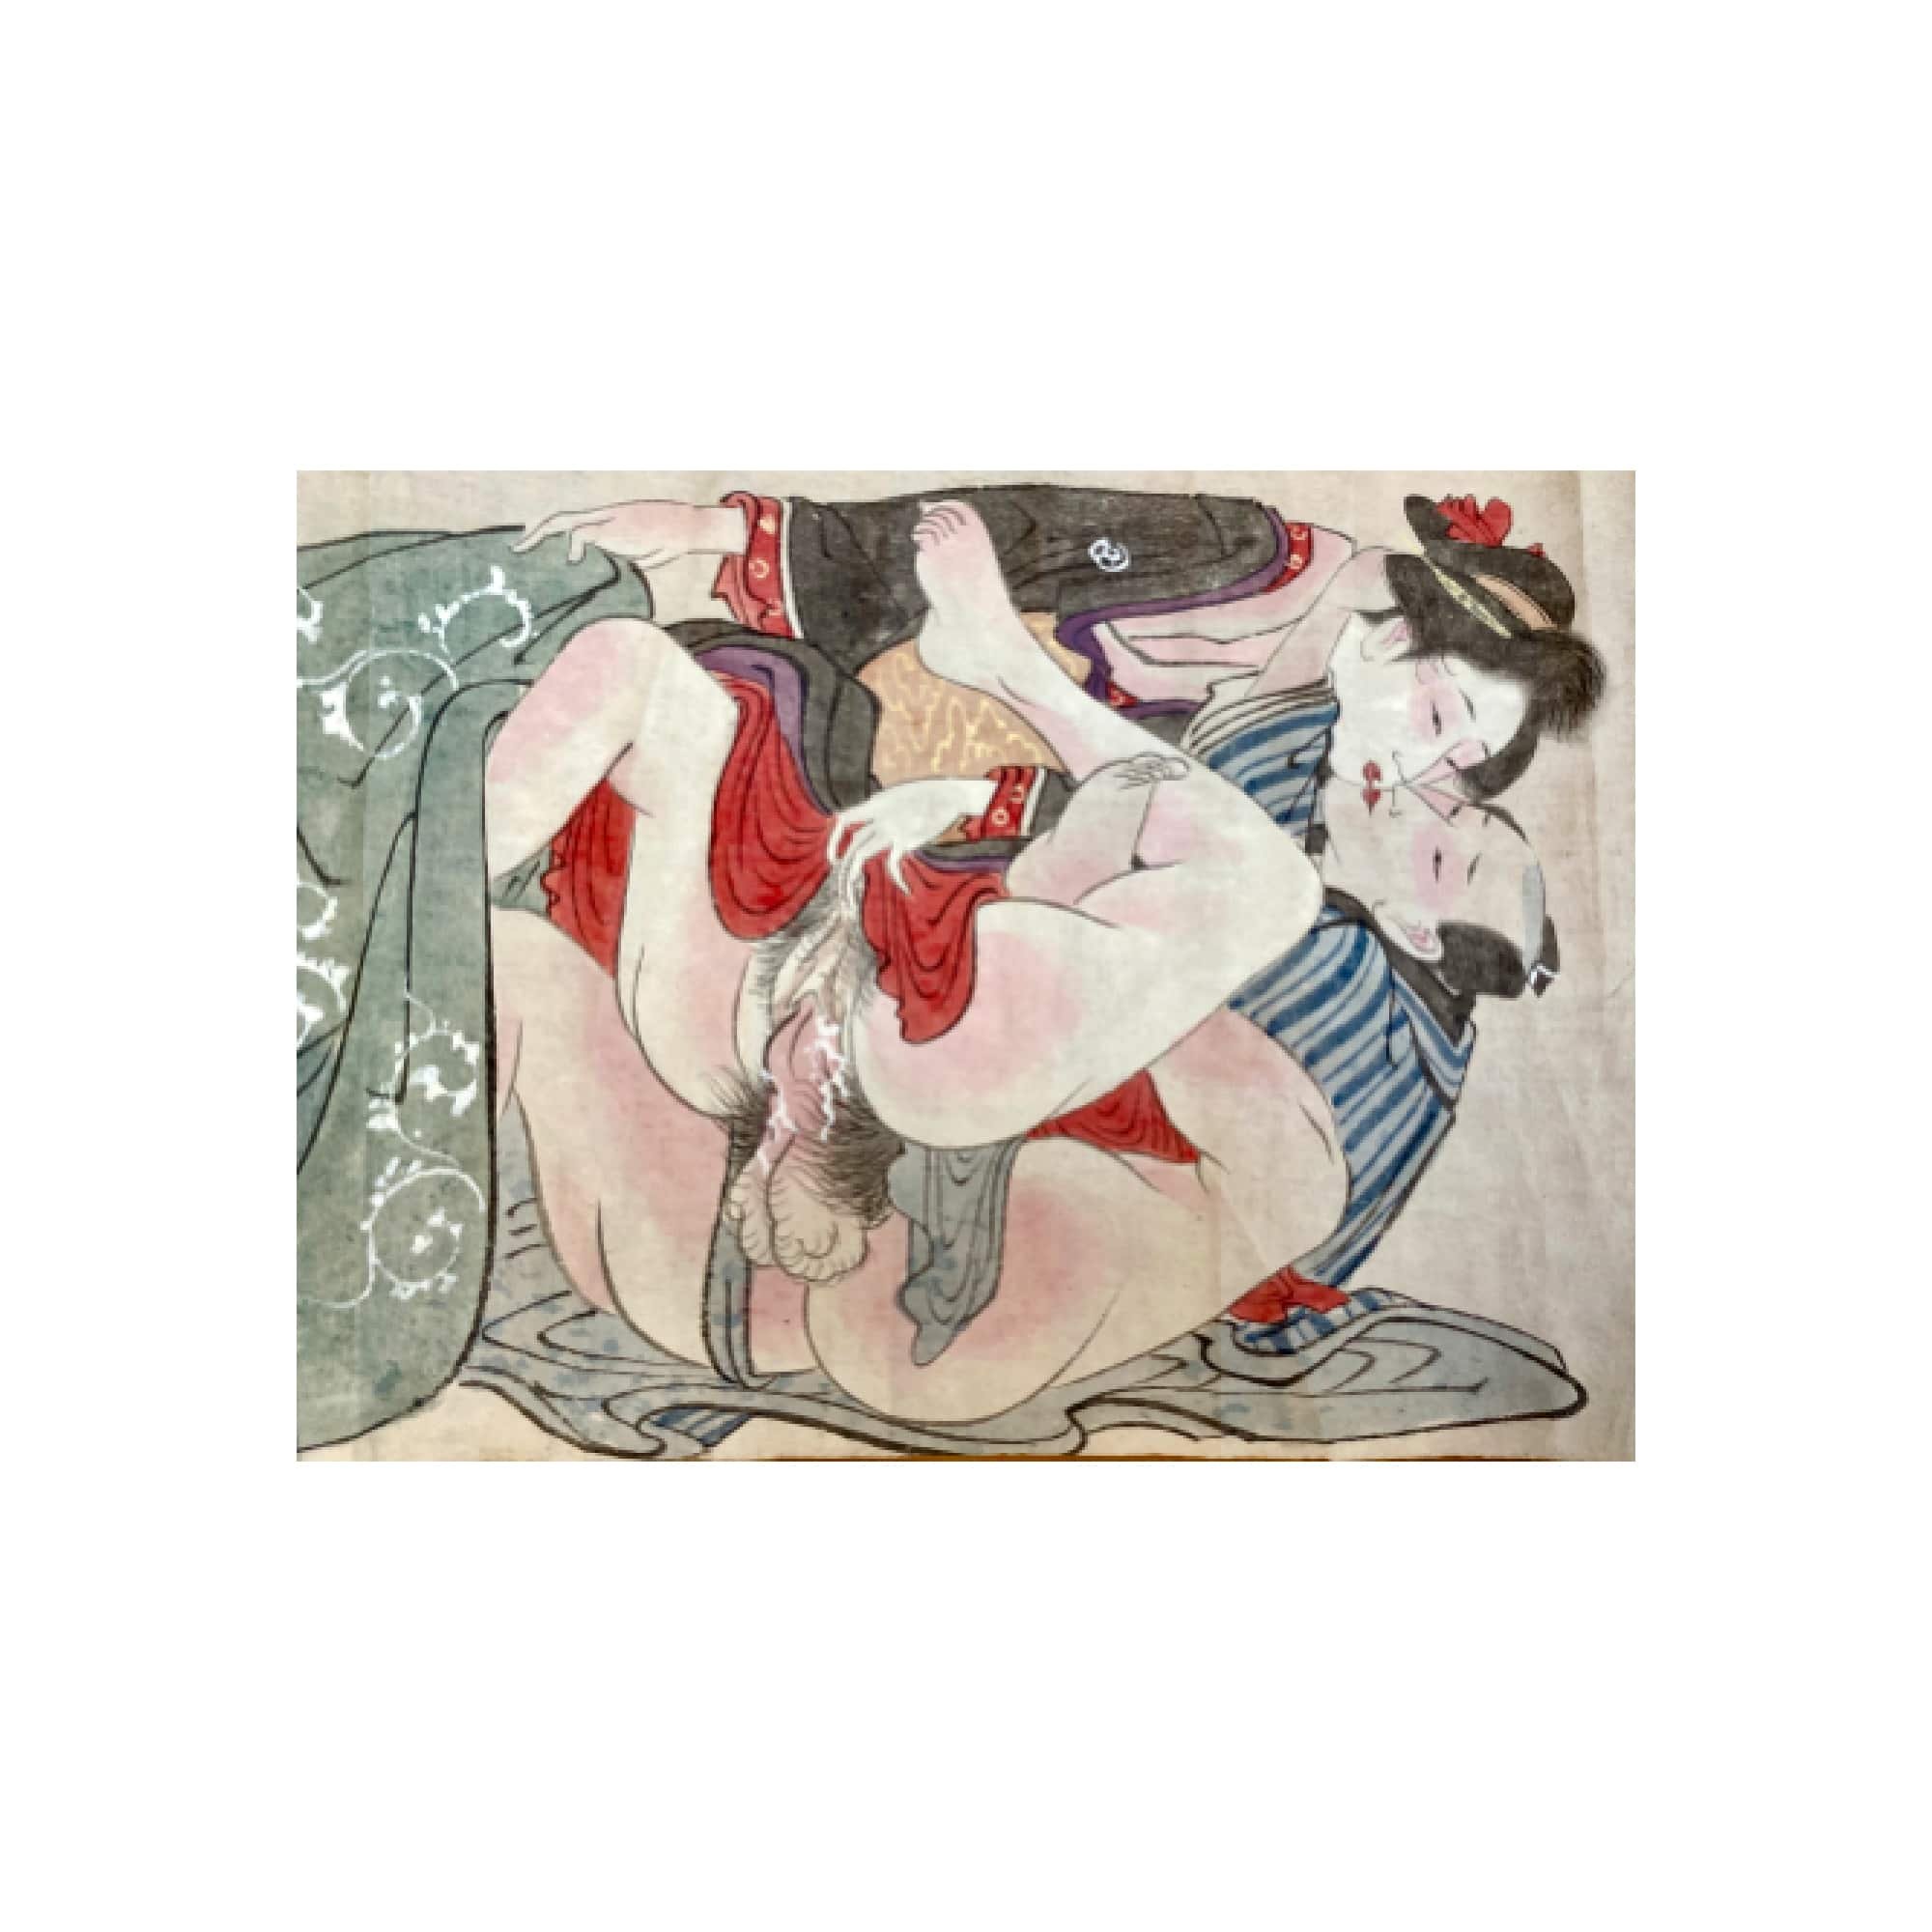 rouleau-shunga-estampe-erotique-antiquite-japonaise-4.jpeg